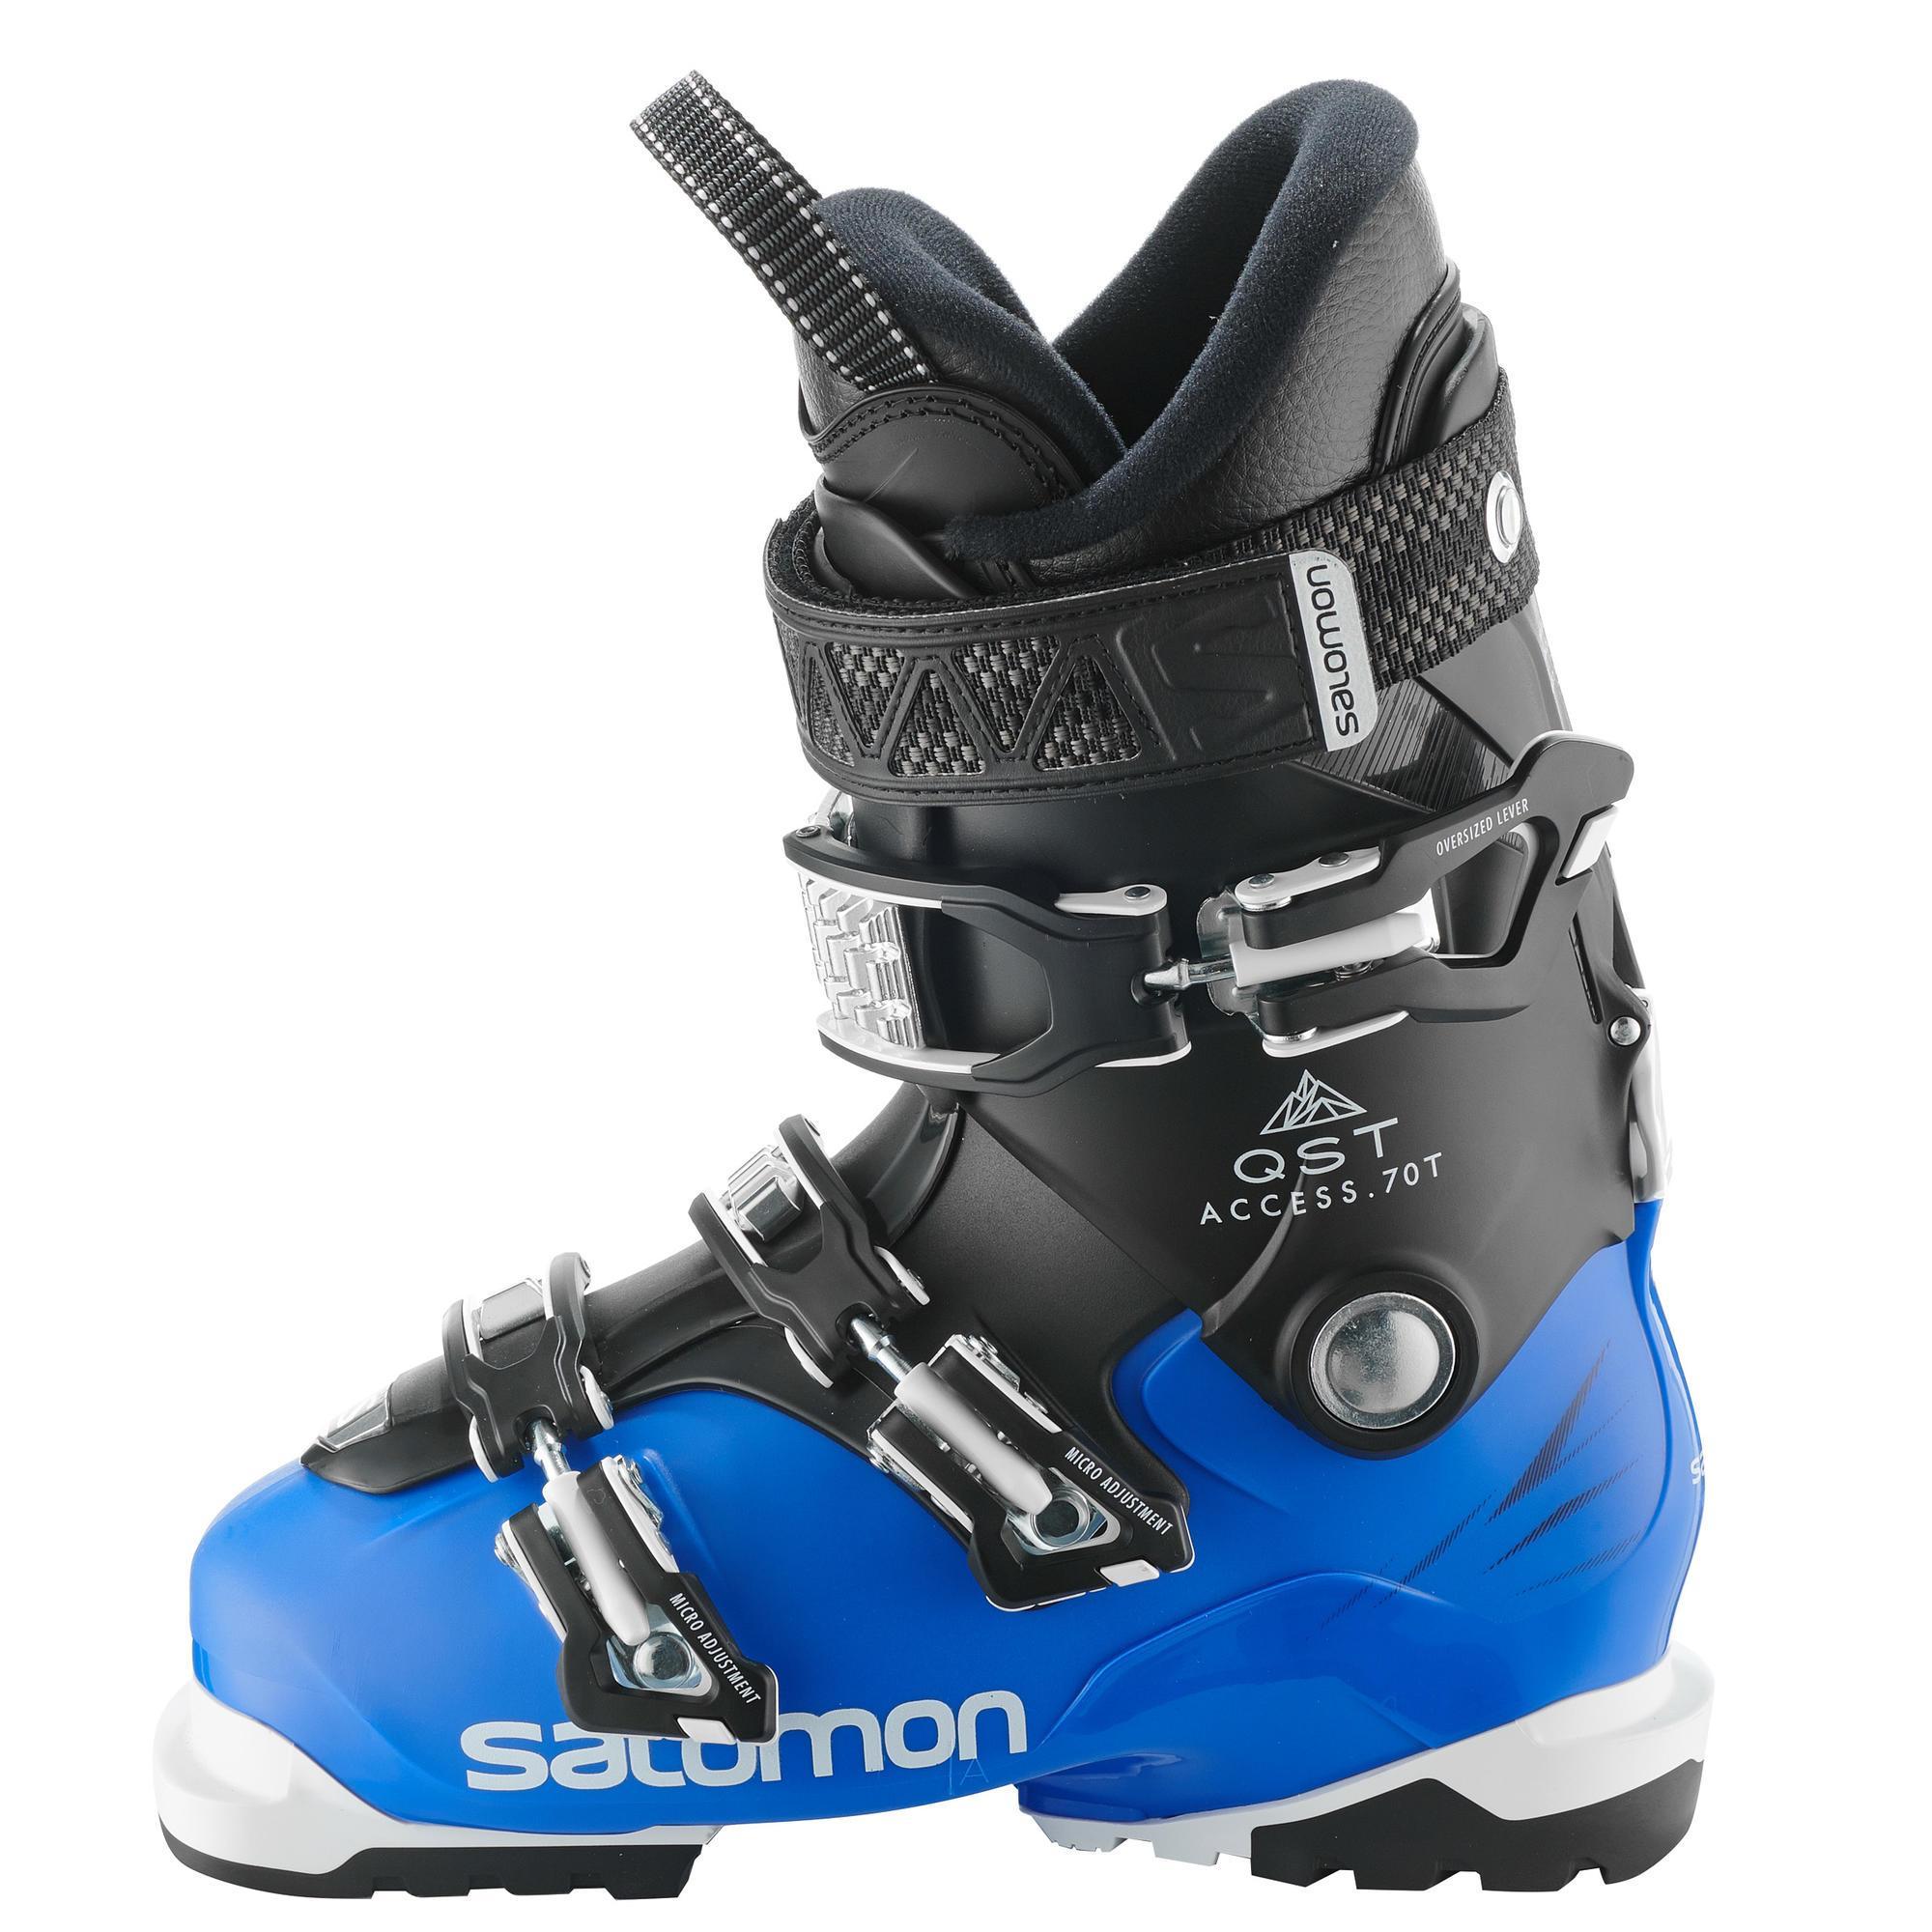 salomon qst access 70 women's ski boots